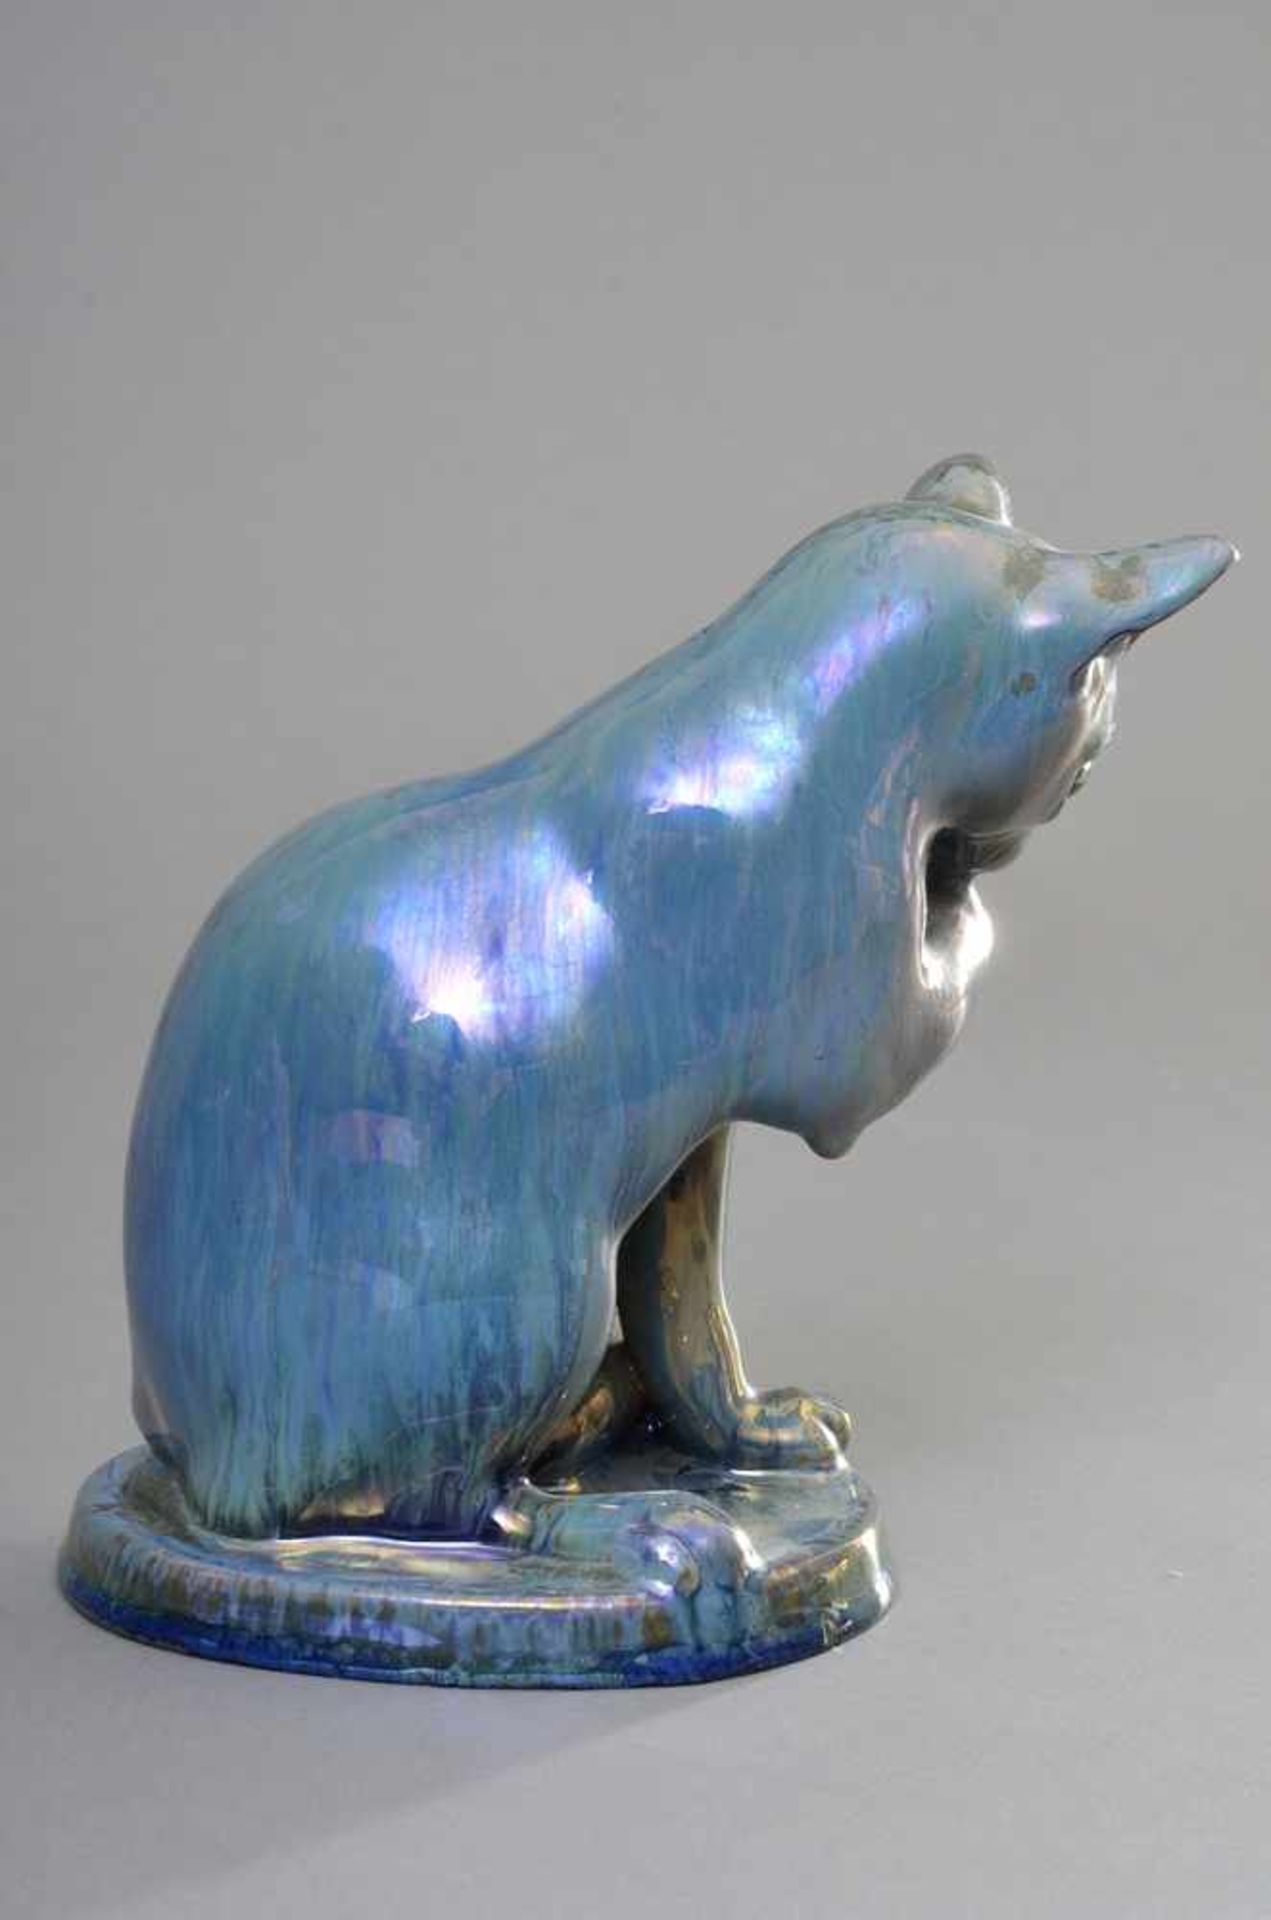 Keramik Figur "Sitzende Katze", blaue Lüsterglasur mit Glasaugen, Herst.: "Gres de Rambervillers", - Bild 3 aus 5